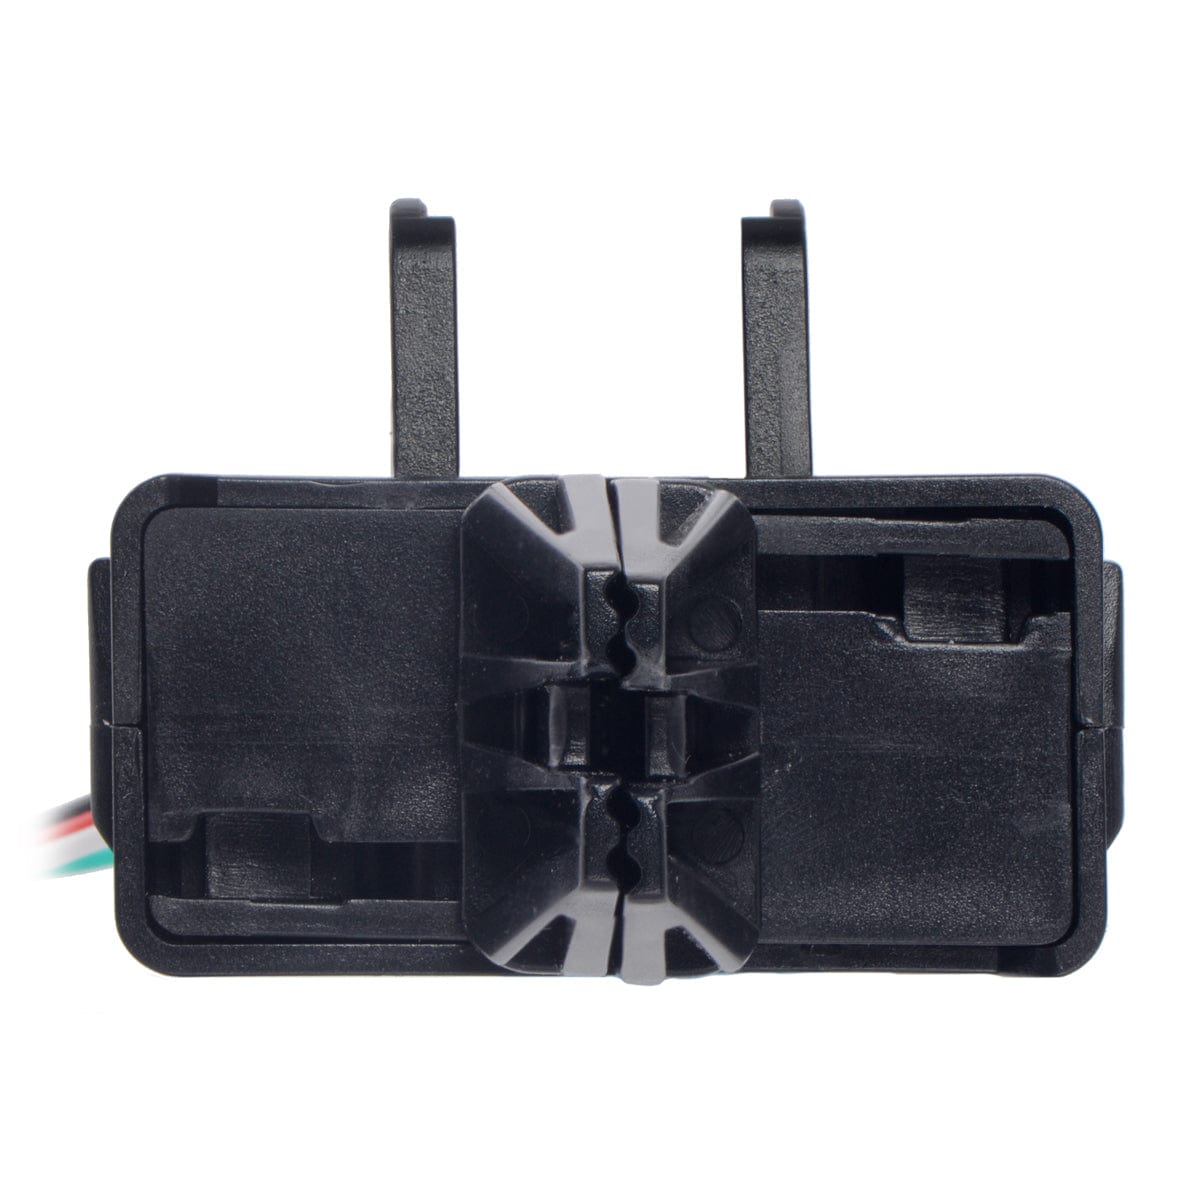 Pololu Micro Gripper Kit with Position Feedback Servo - The Pi Hut